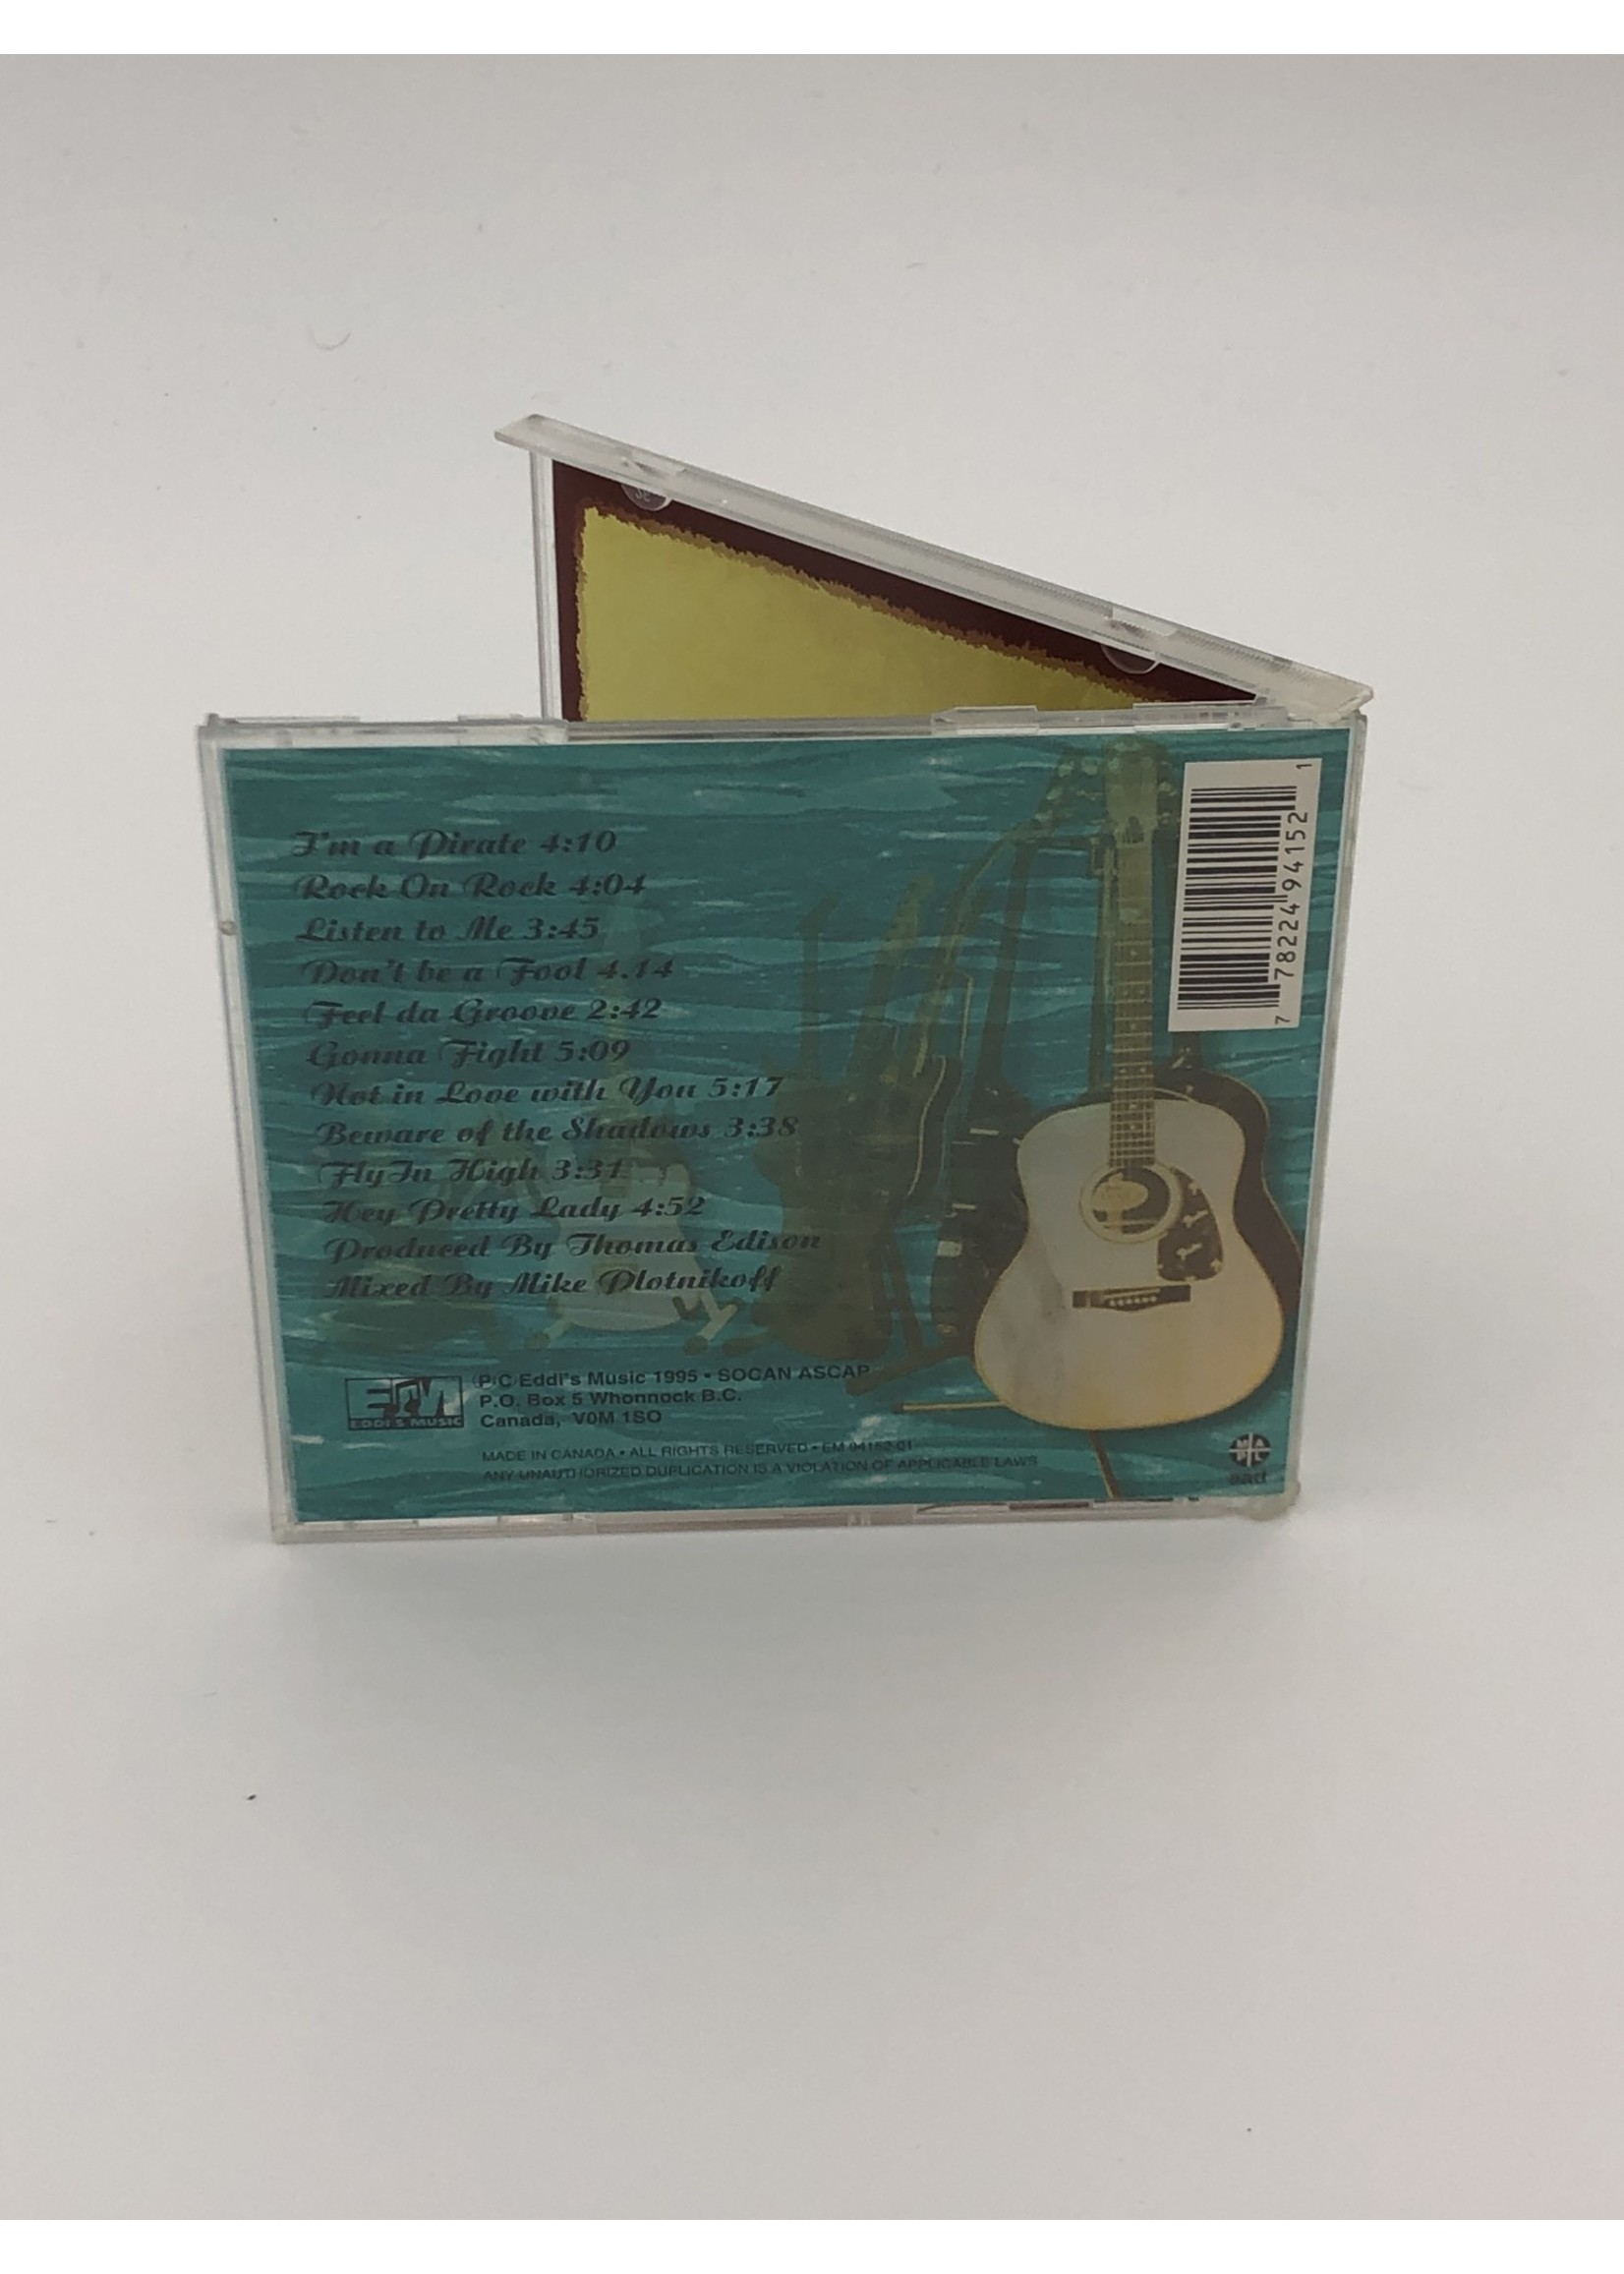 CD Edison: Pirate CD